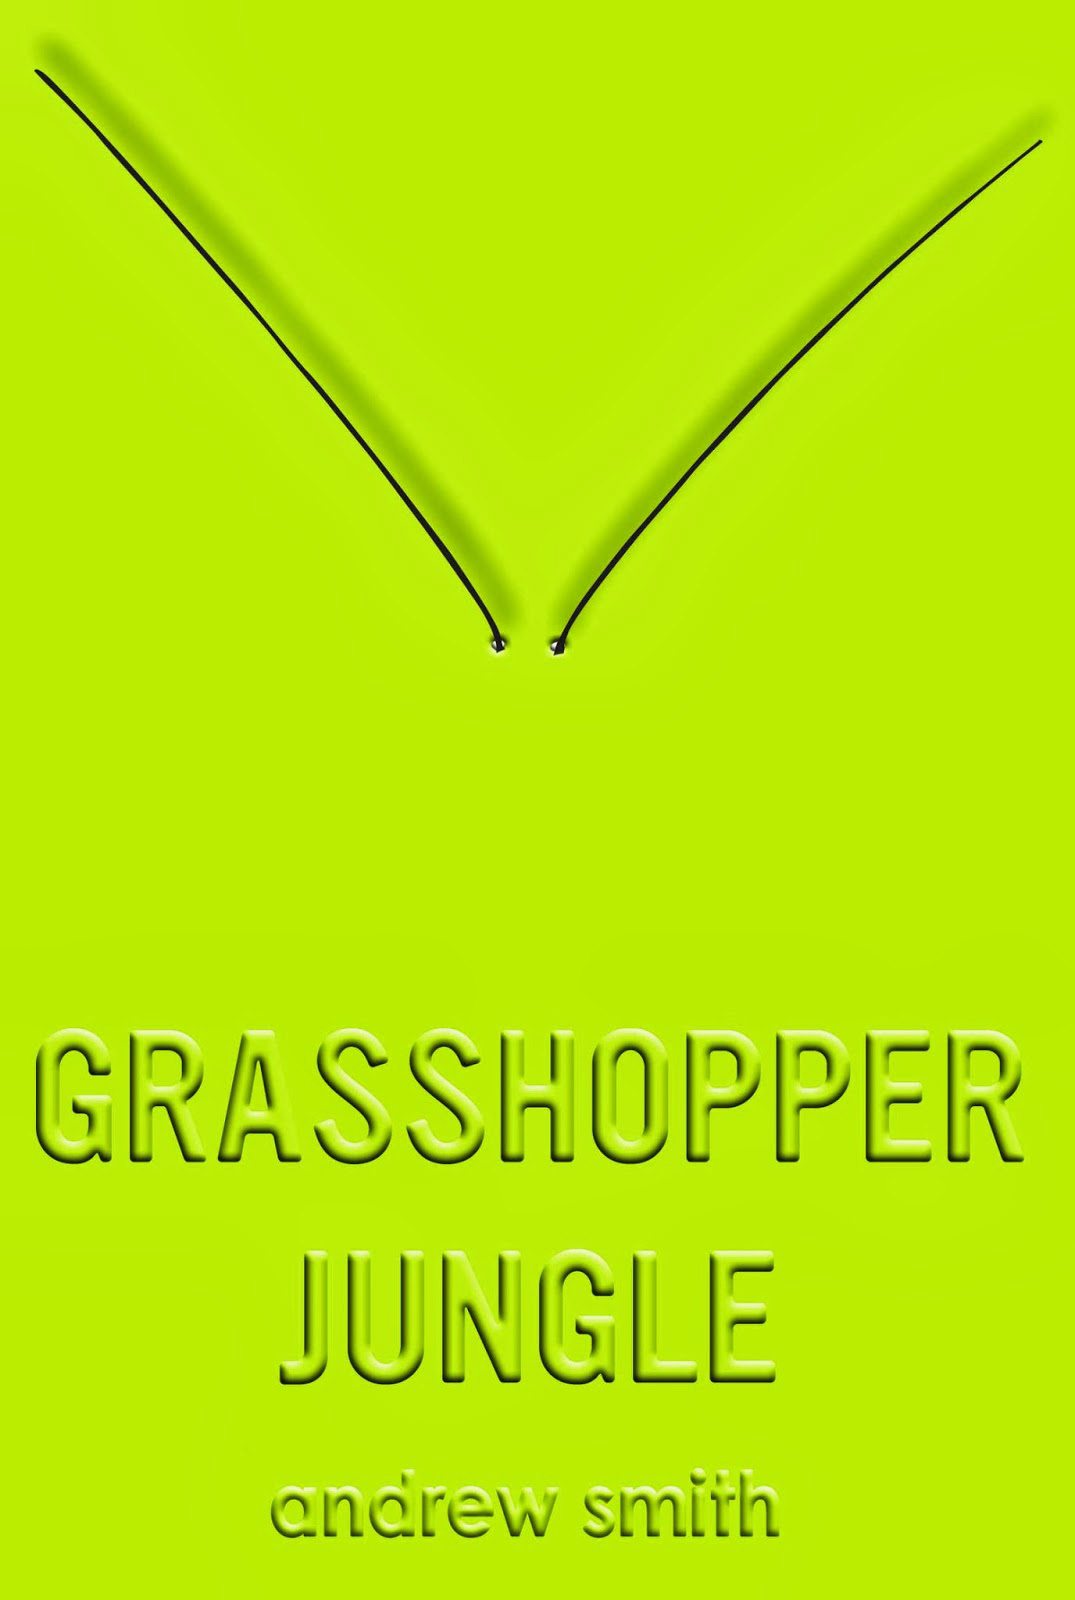 Grasshopper Jungle